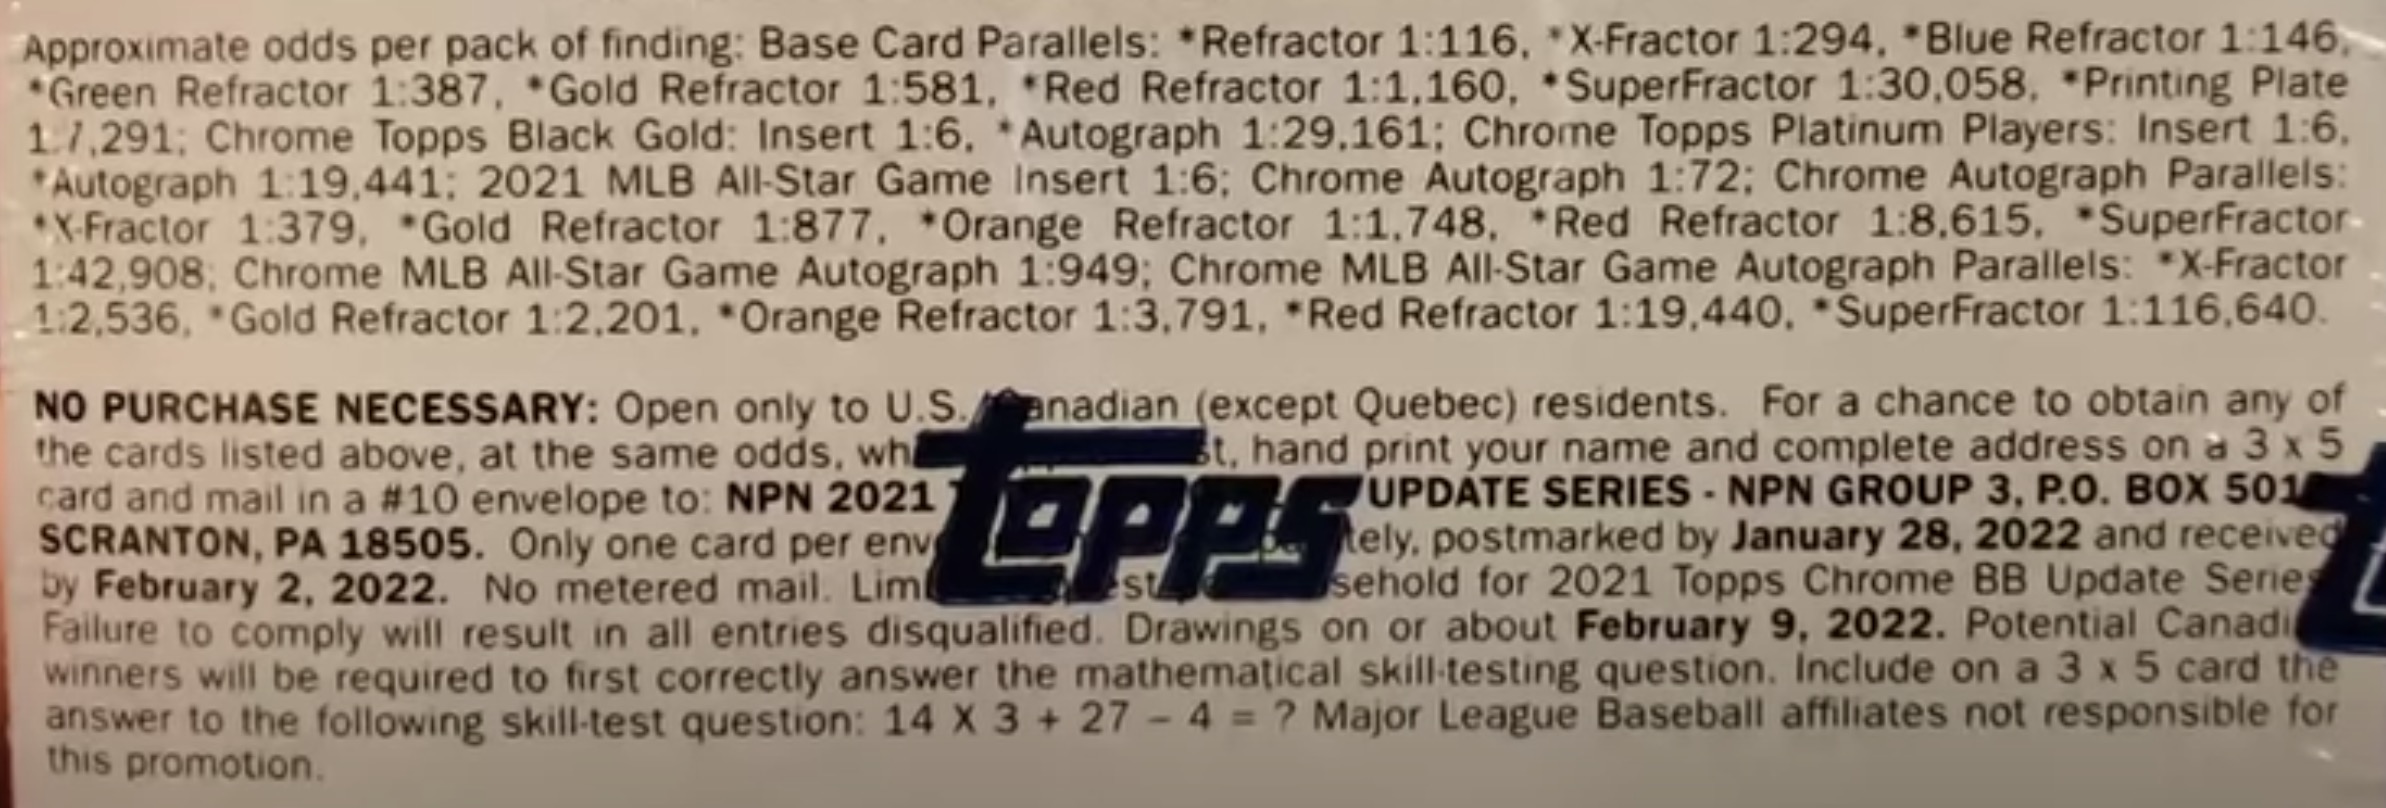 2021 Topps Chrome Update Series Baseball Cards - Mega Box - No Purchase Necessary (NPN) Information